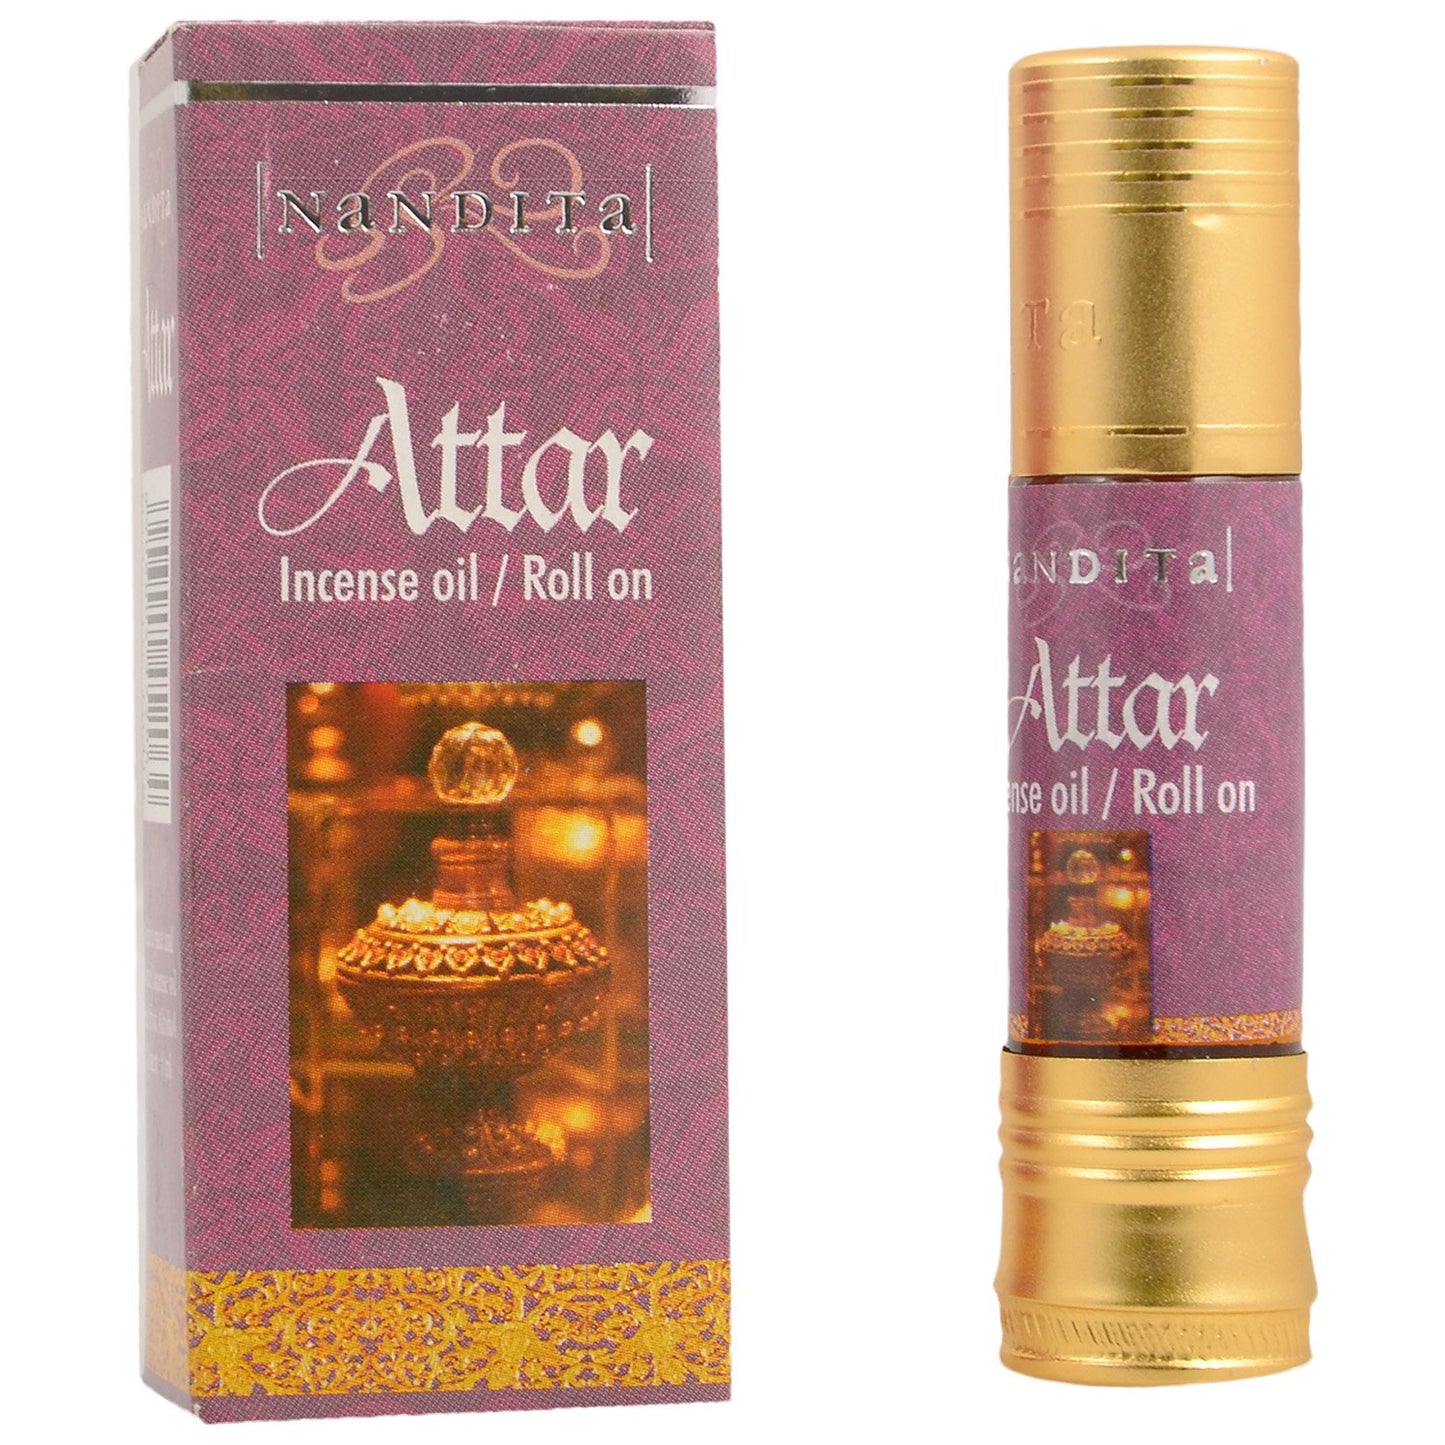 Nandita Attar Incense Oil - Roll On - 8ml Bottle - Ambali Fashion Oils aroma, aromatherapy, classic, eastern, ethnic, gypsy, hippie, incense, indian, meditation, nagchampa, new age, sixties, 